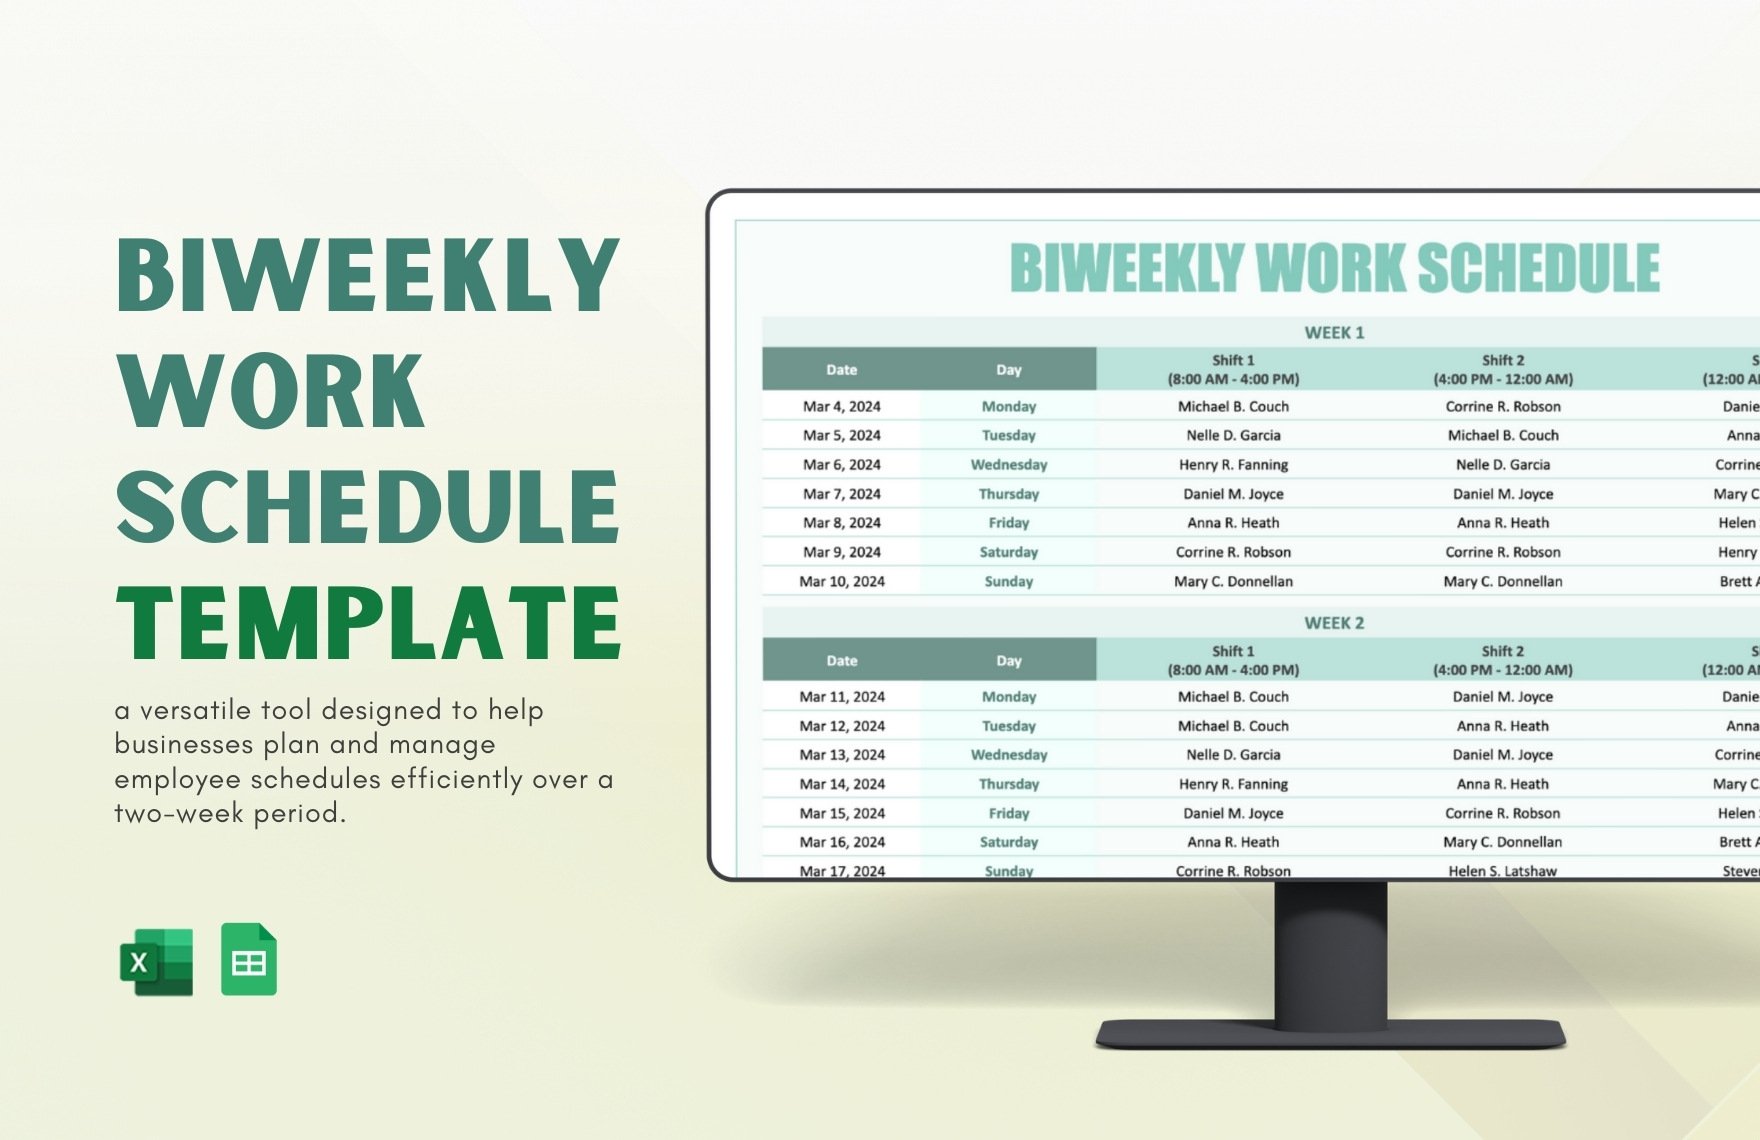 Biweekly Work Schedule Template in Excel, Google Sheets